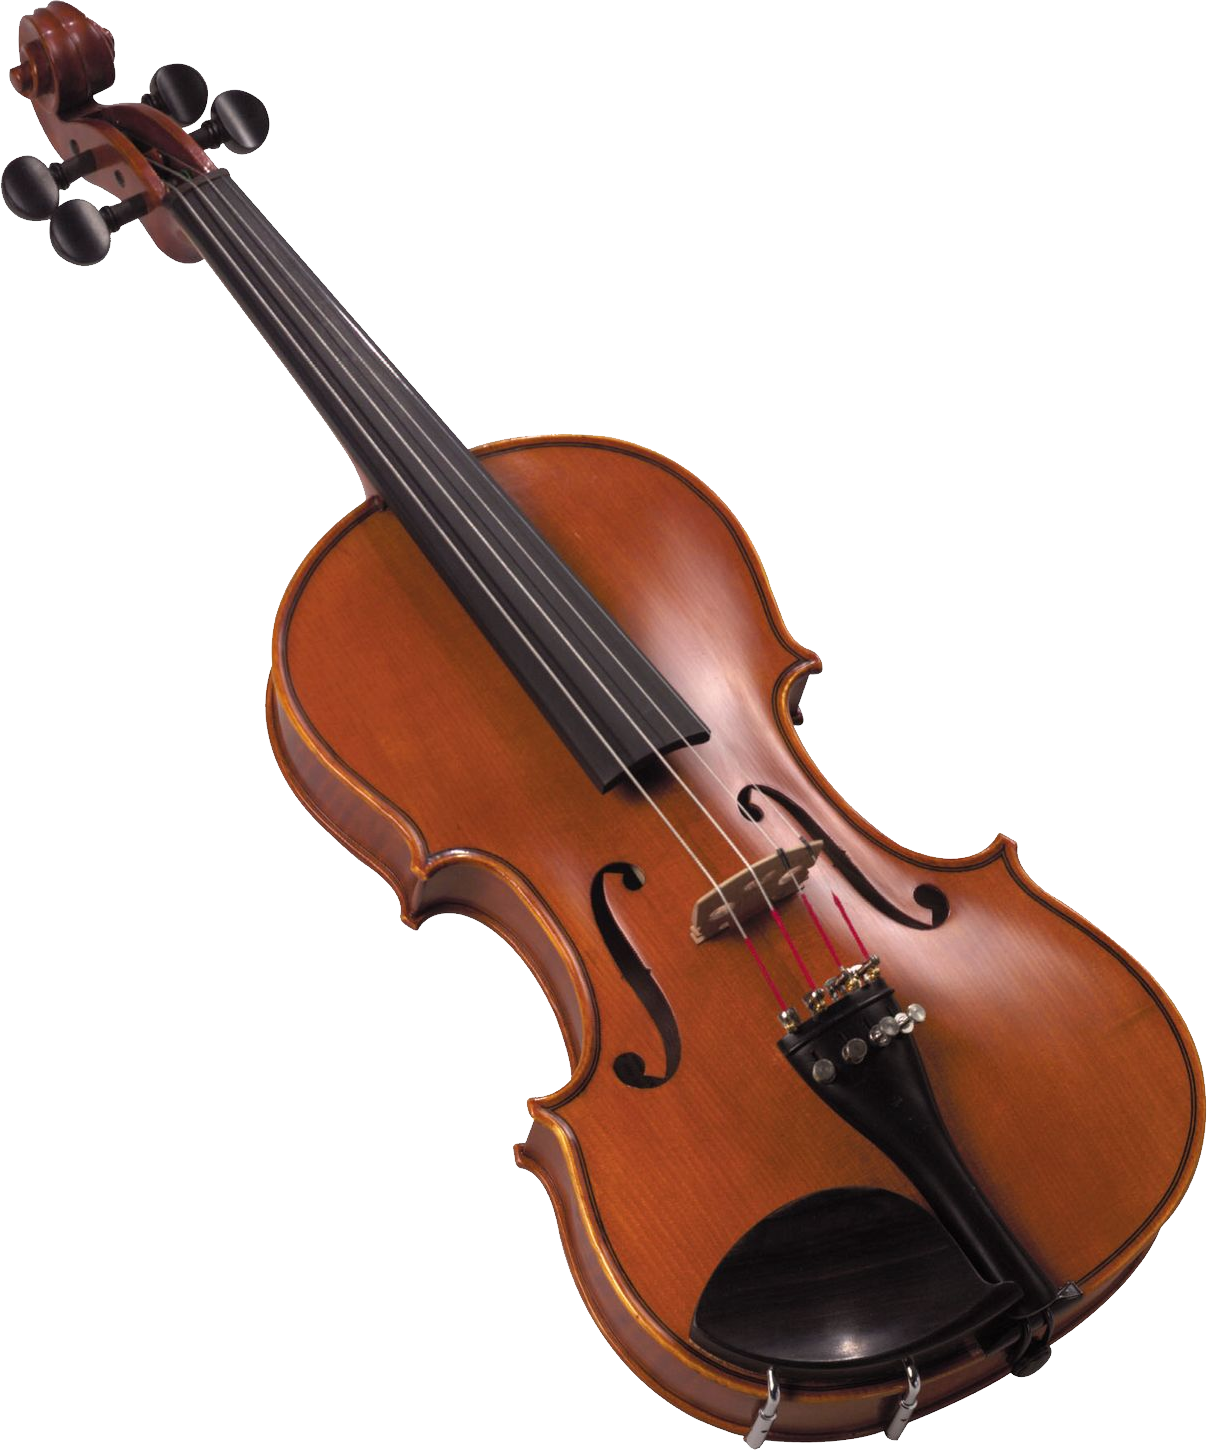 Violin Png - Violin, Transparent background PNG HD thumbnail